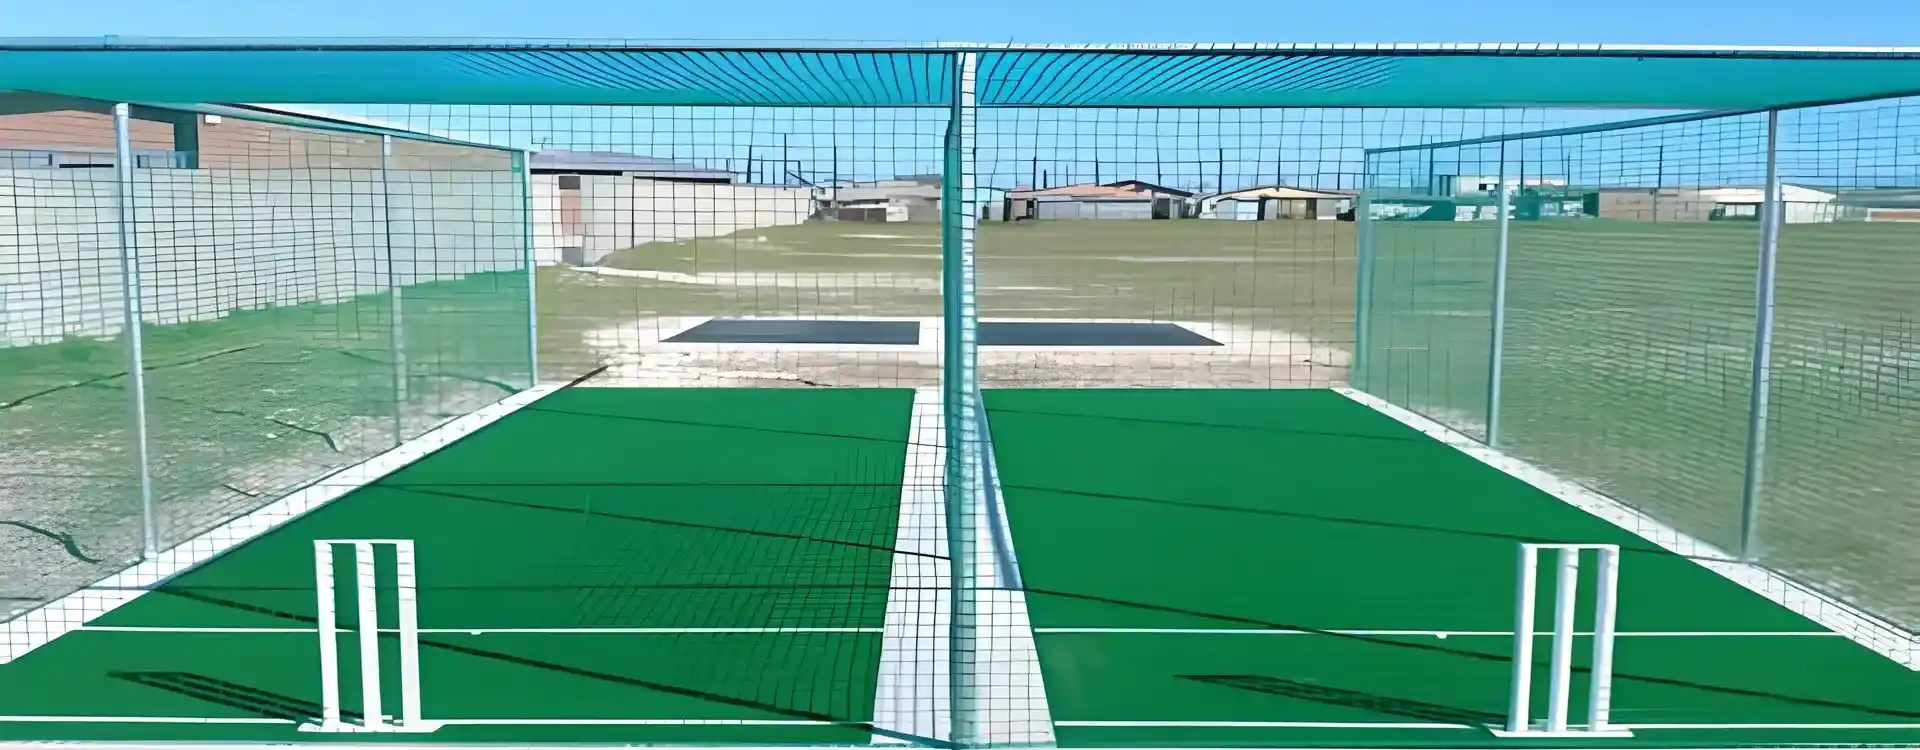 Supreme Netting Cricket Practice Nets in Hyderabad, Jubilee Hills, Banjara Hills, Secunderabad, Khairatabad, Tarnaka, Ameerpet, Madhapur, Kukatpally, Manikonda, Kondapur, LB Nagar, Hi-Tech City, Uppal